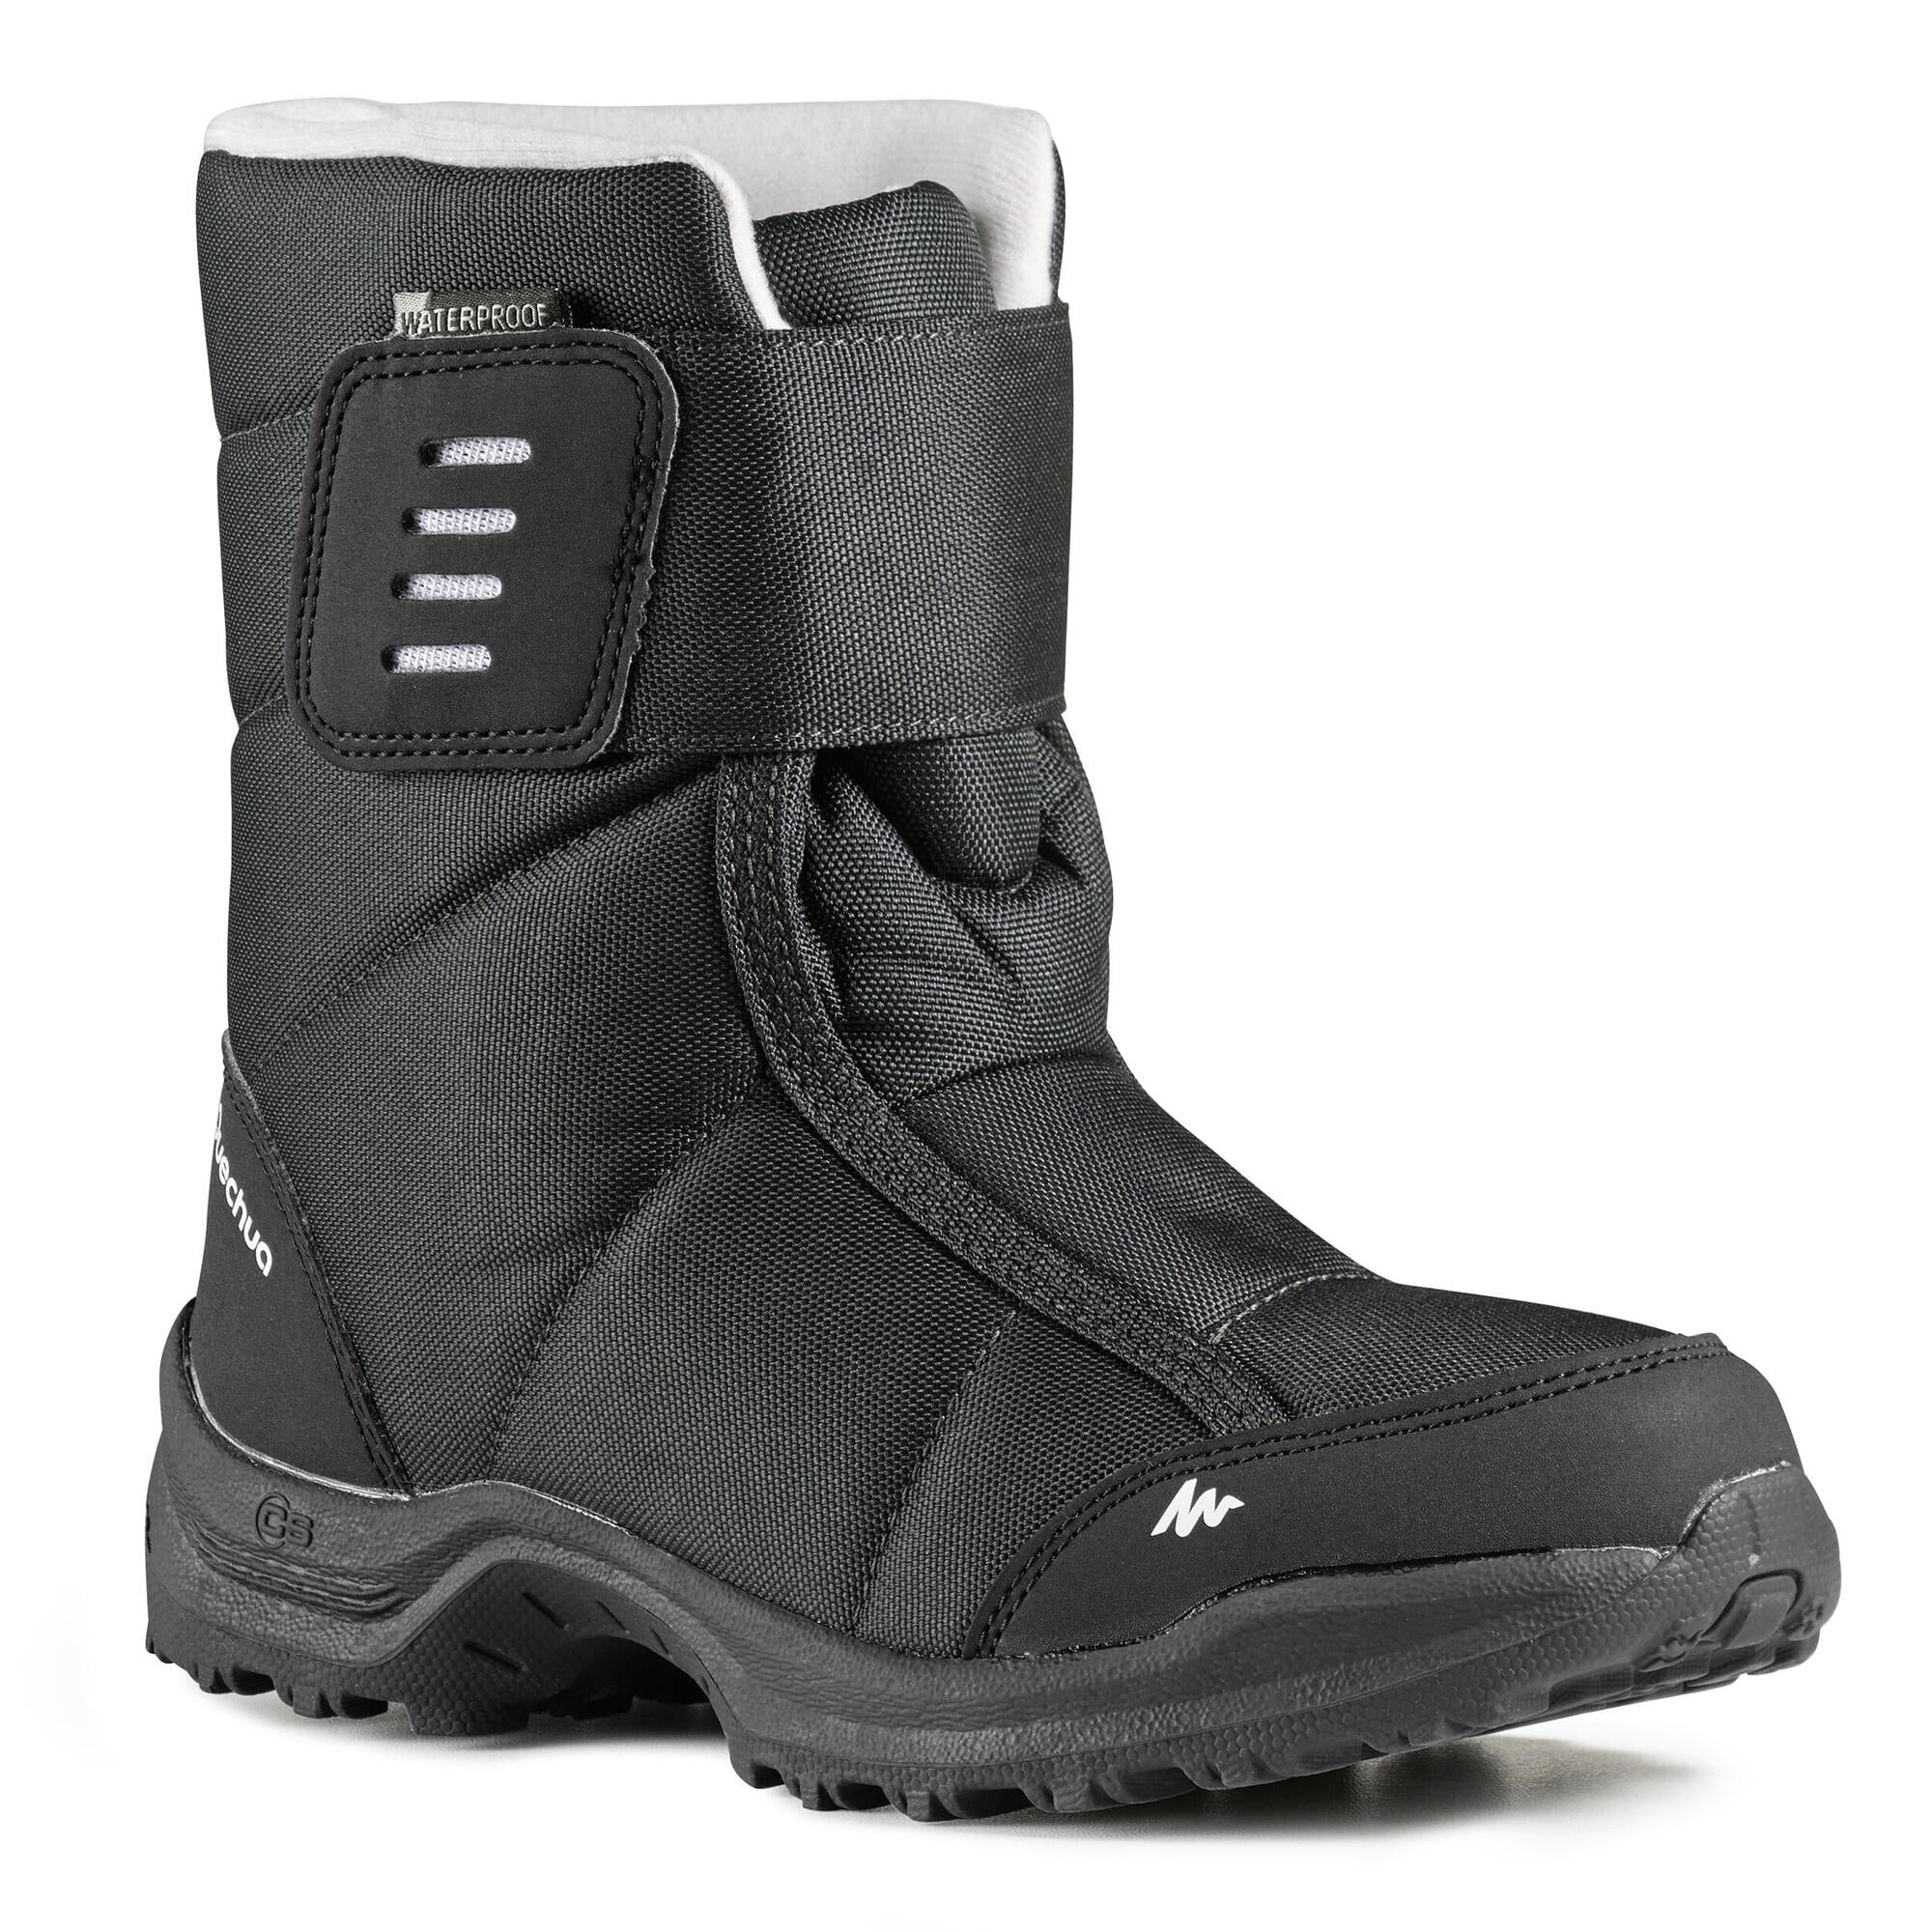 Quechua X-Warm, Snow Boots, Kids' - Walmart.com